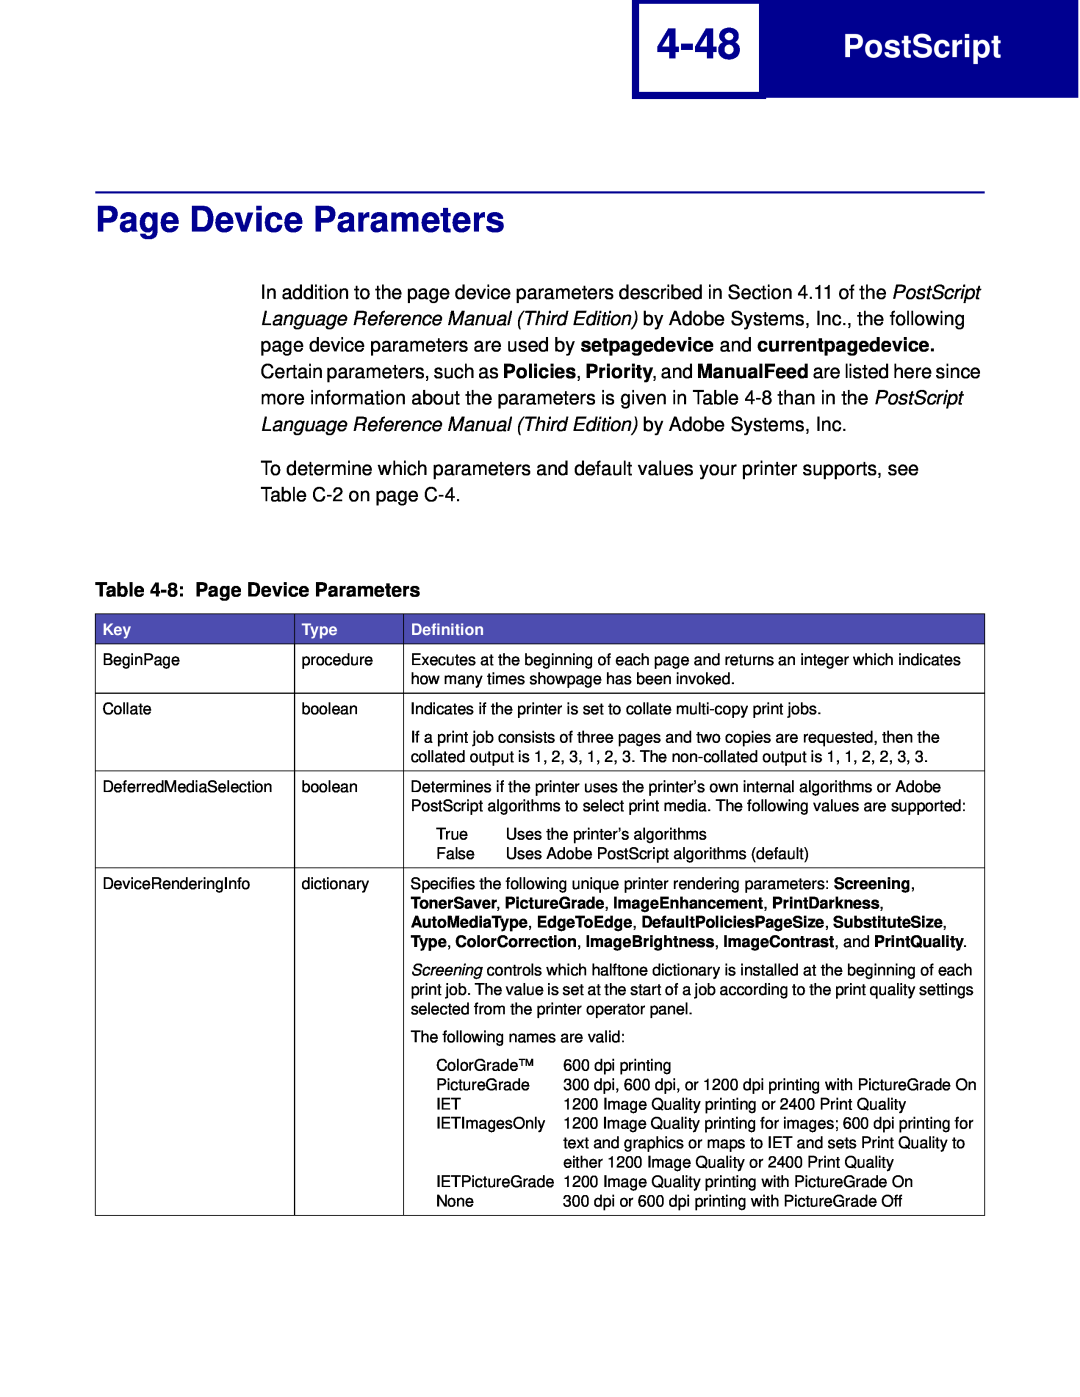 Lexmark C762, C760 manual 4-48, PostScript, 8 Page Device Parameters 